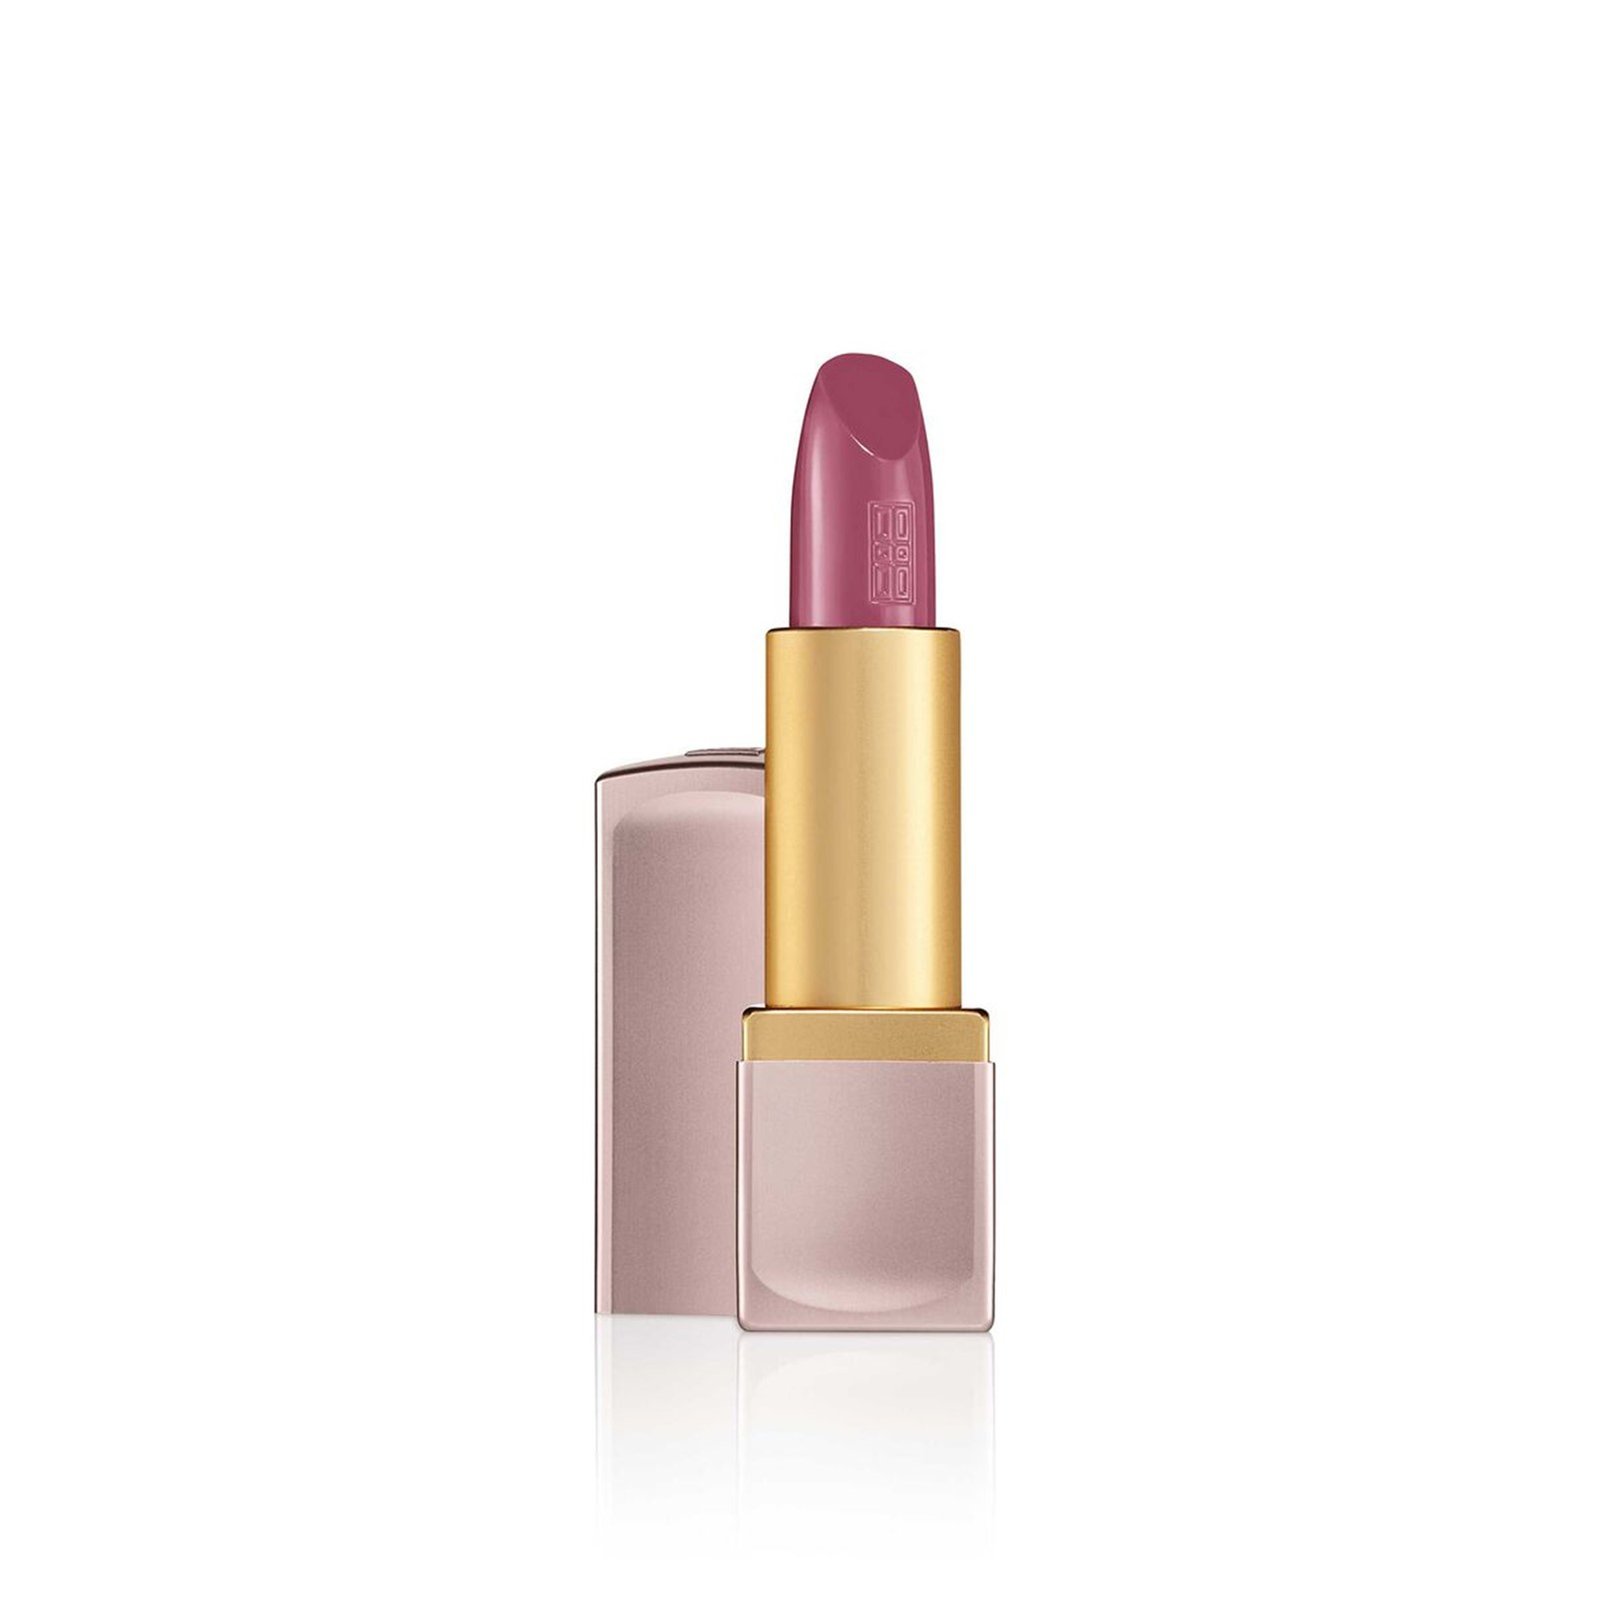 Elizabeth Arden Lip Color Lipstick 10 Dreamy Mauve 4g (0.14 oz)